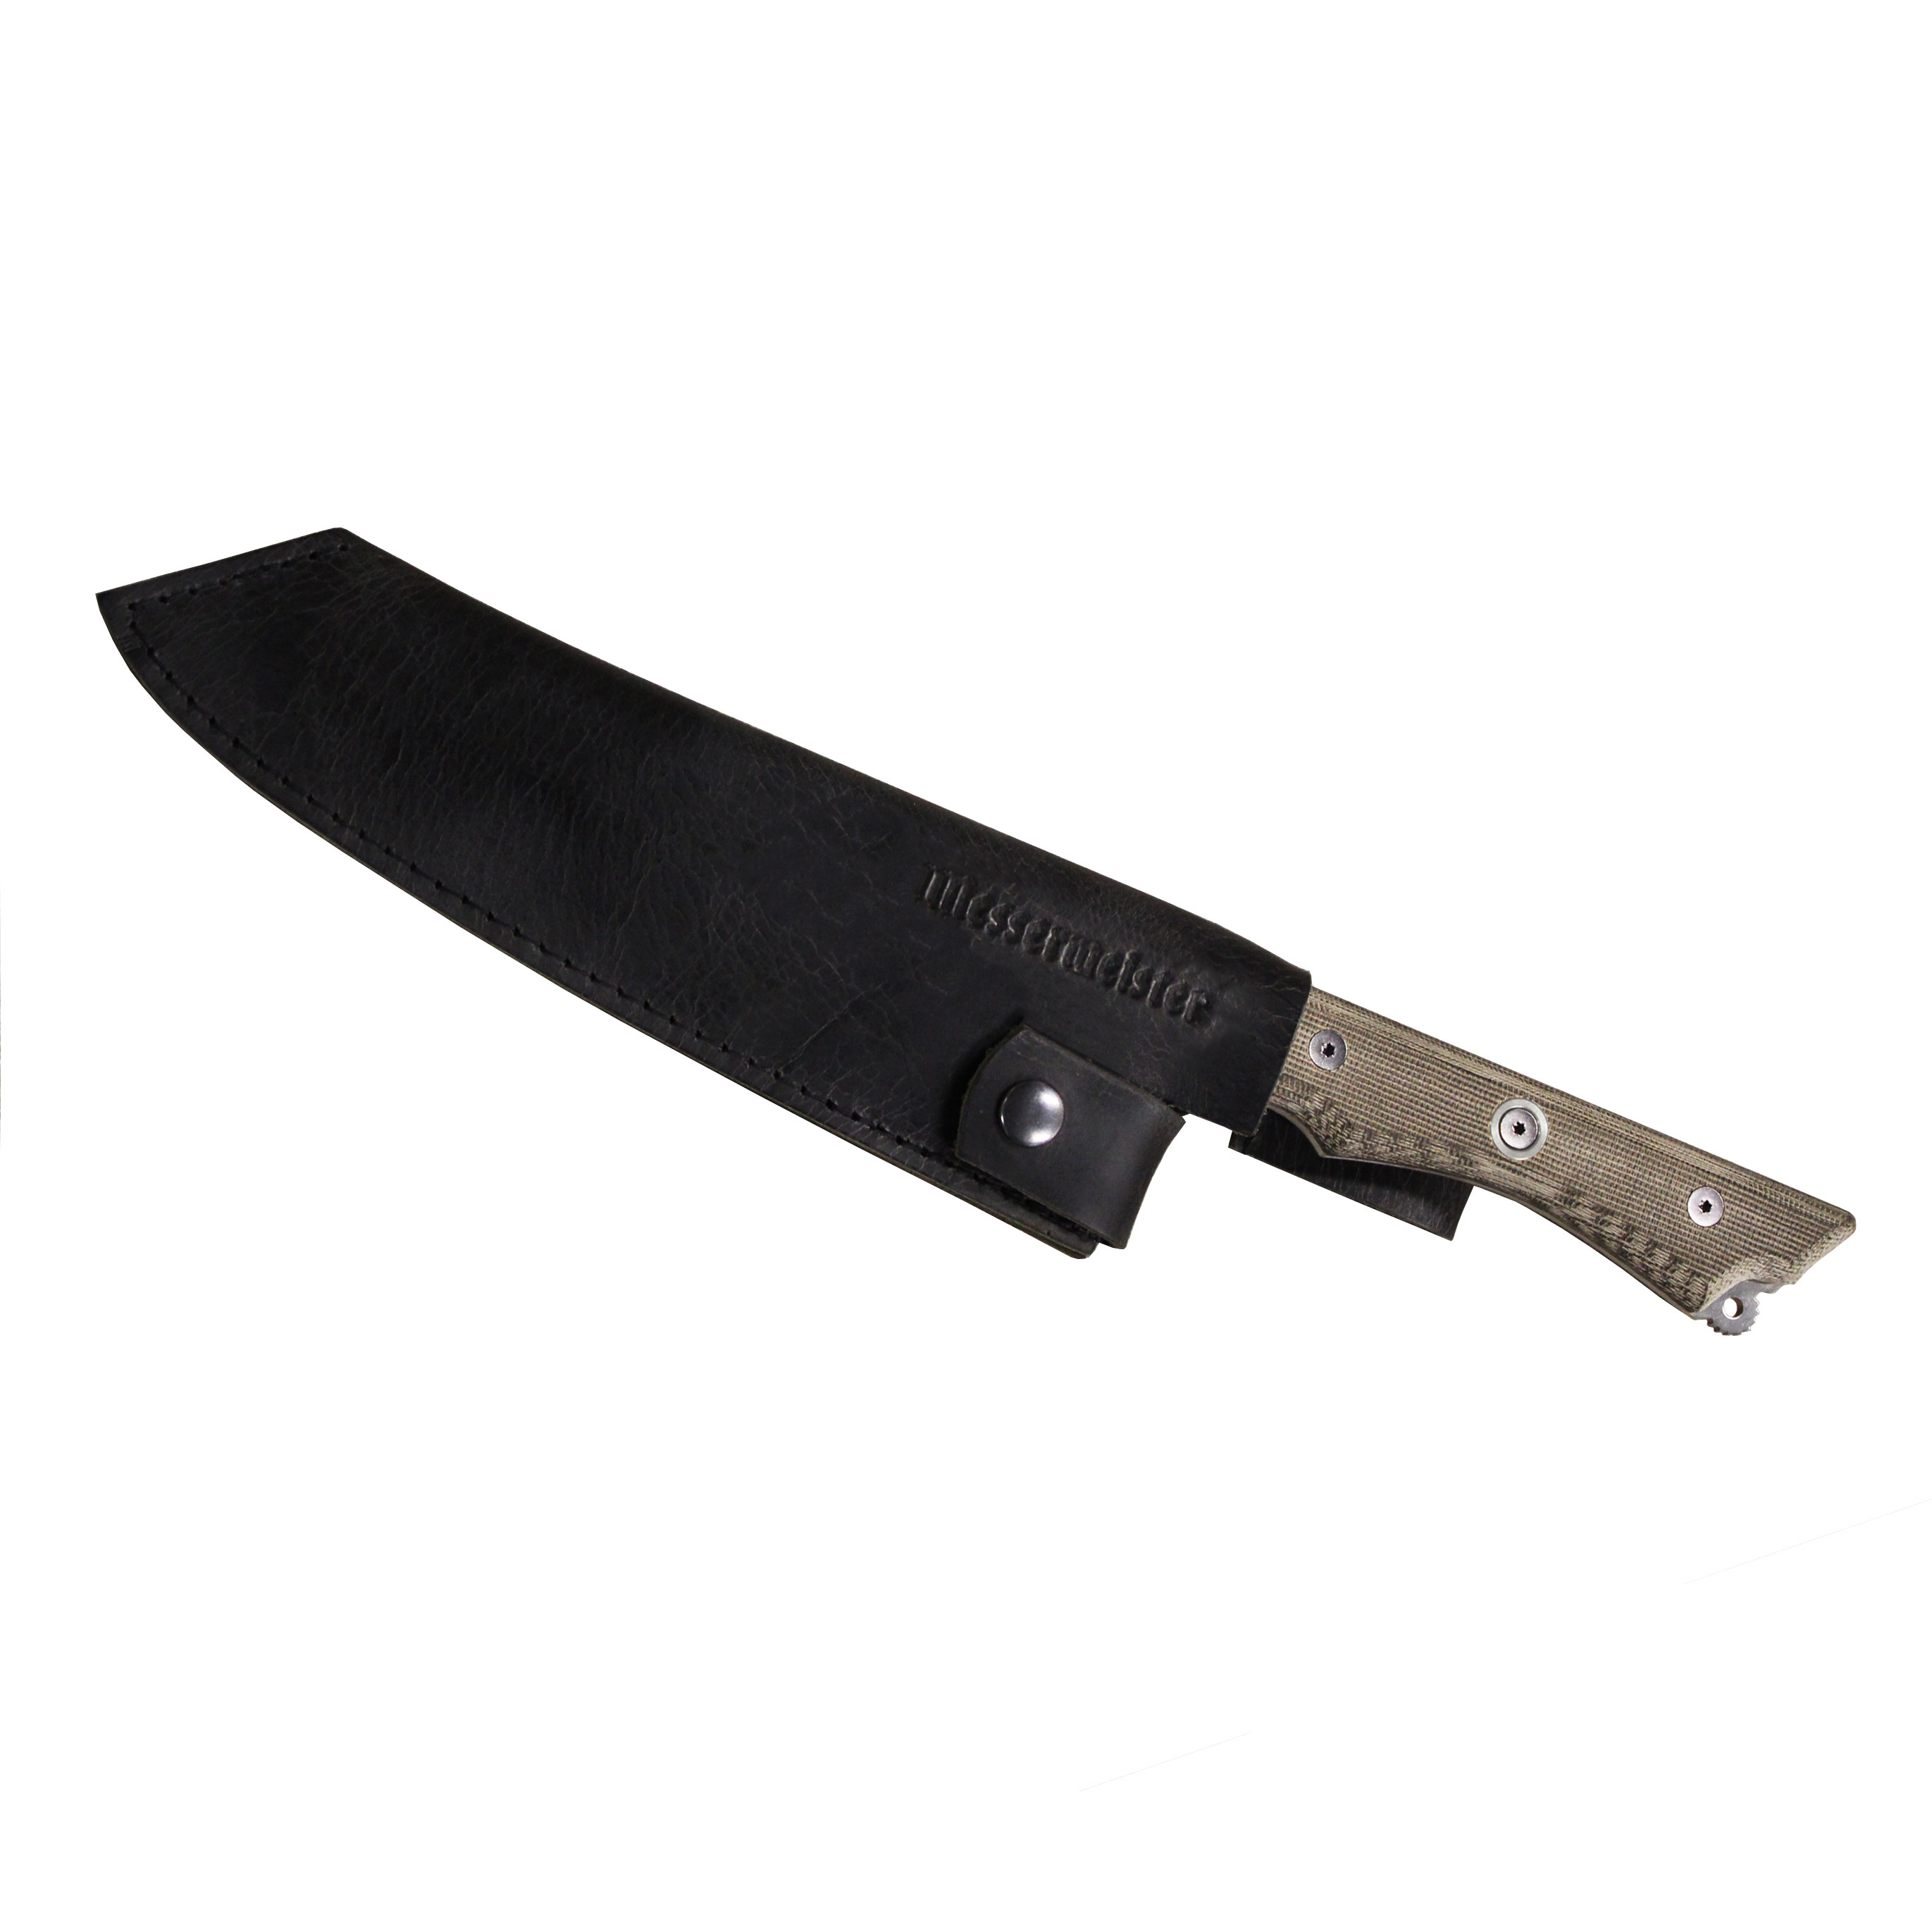 https://knivesstudio.com/293/messermeister-overland-leather-sheath-for-chef-s-knife-8-inch.jpg